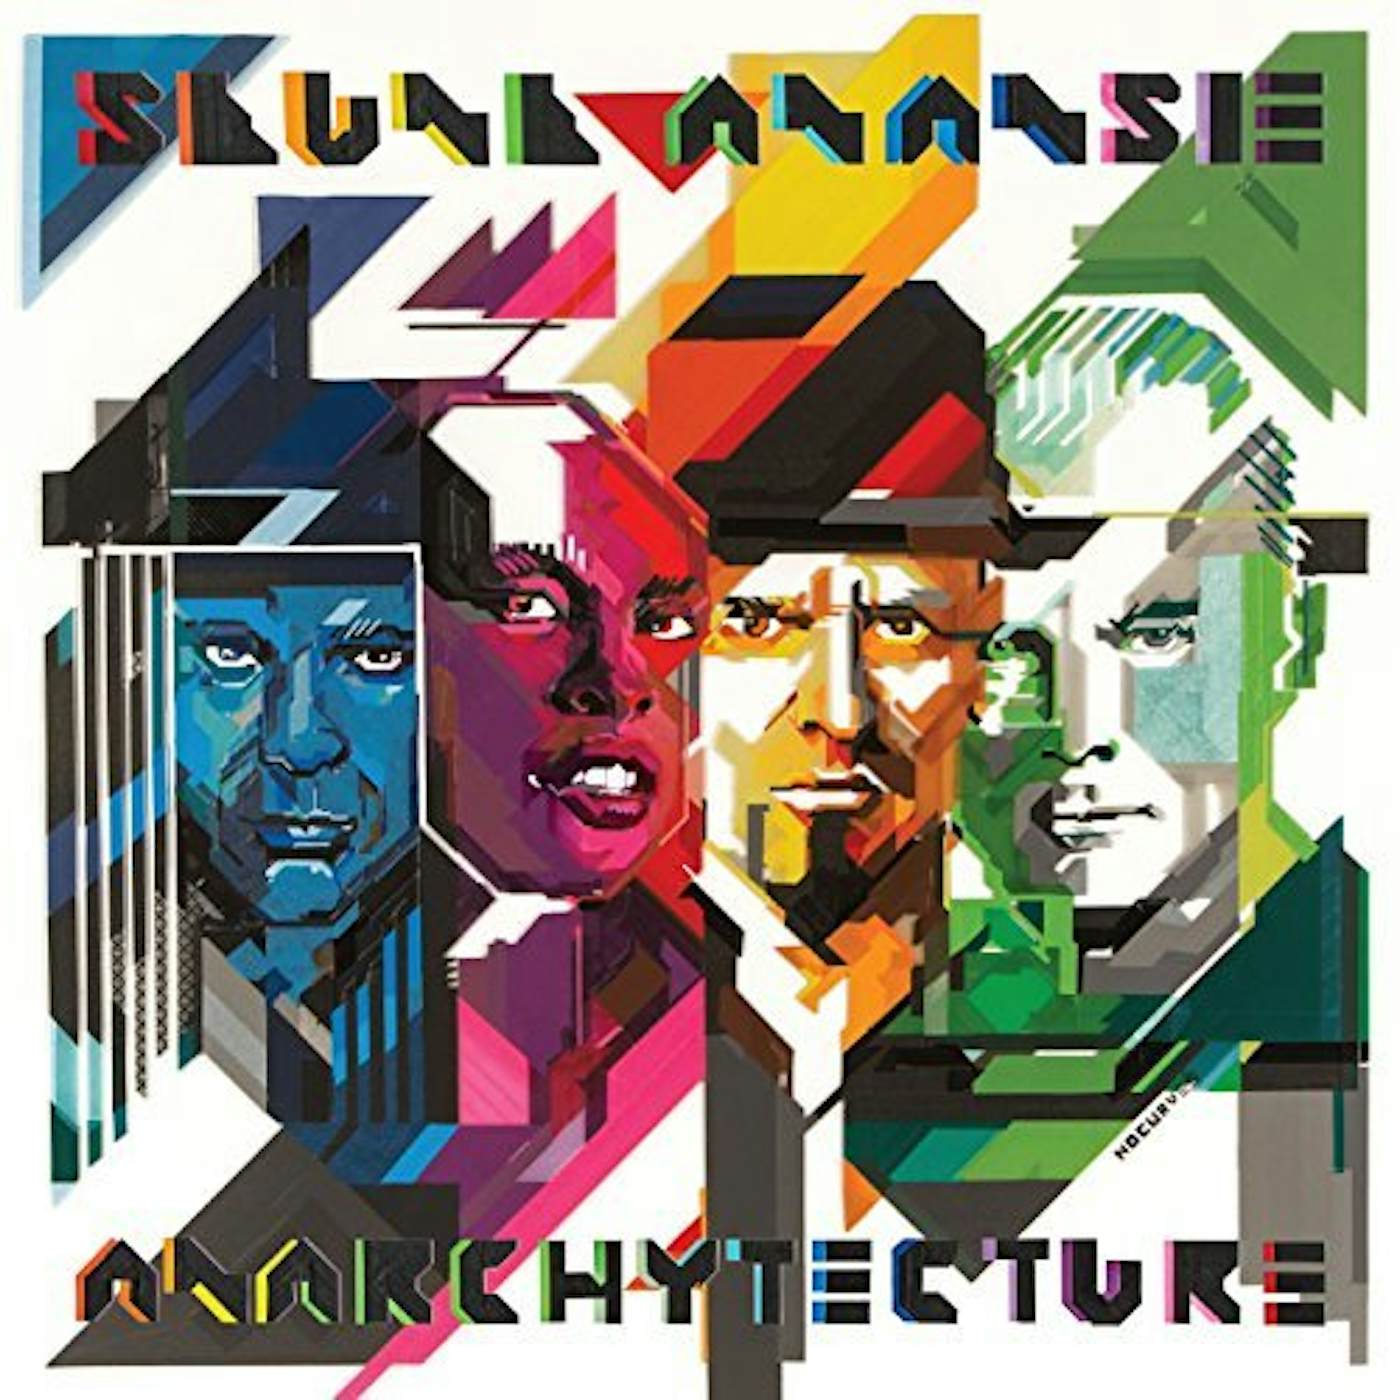 Skunk Anansie ANARCHYTECTURE CD